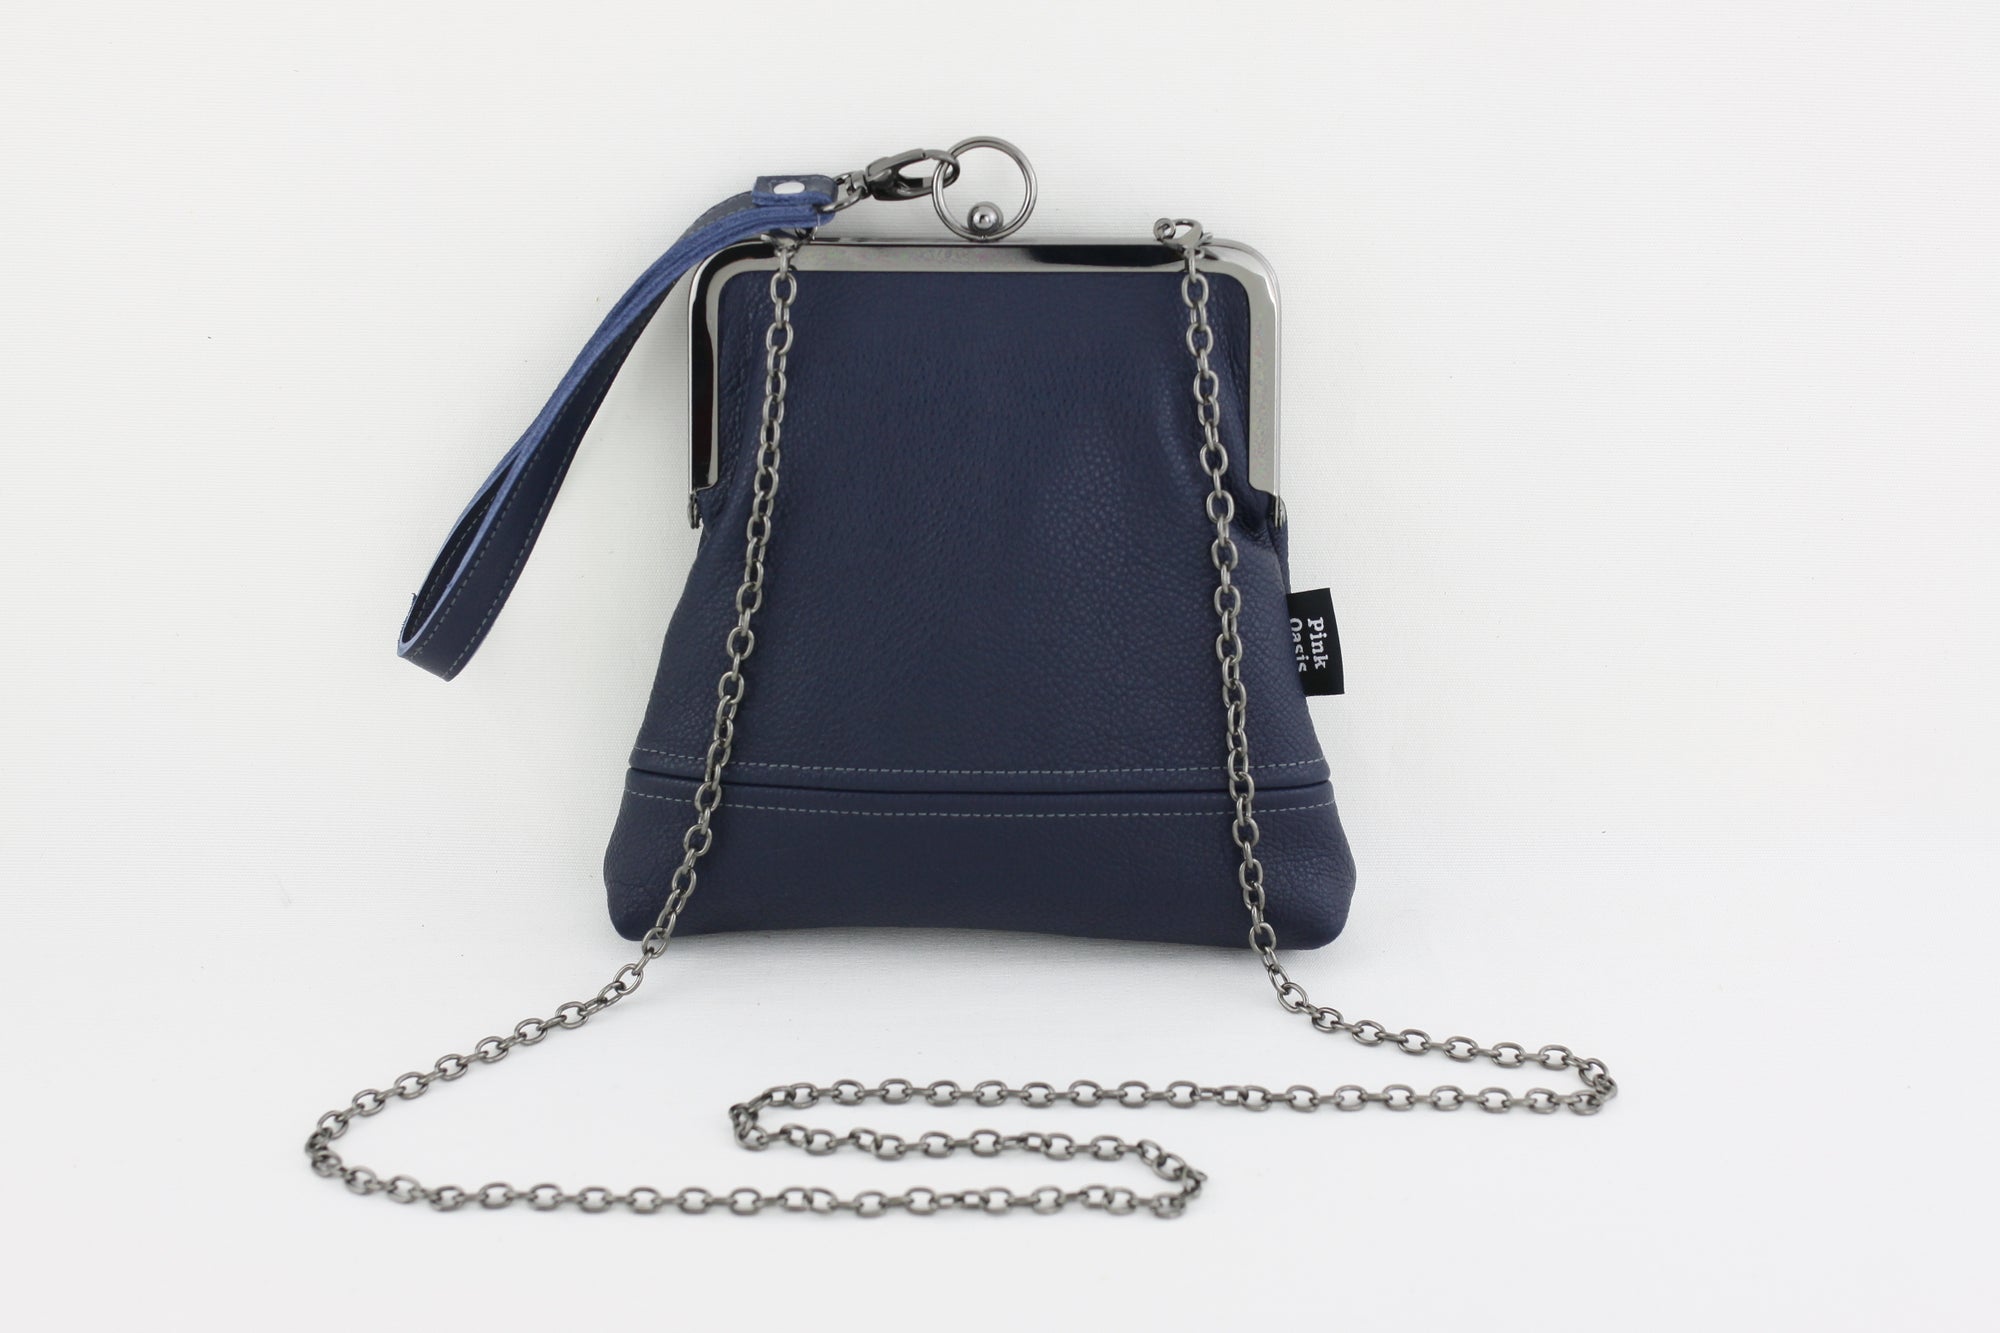 Women's Navy Blue Leather Wristlet Handmade in Australia | PINKOASIS